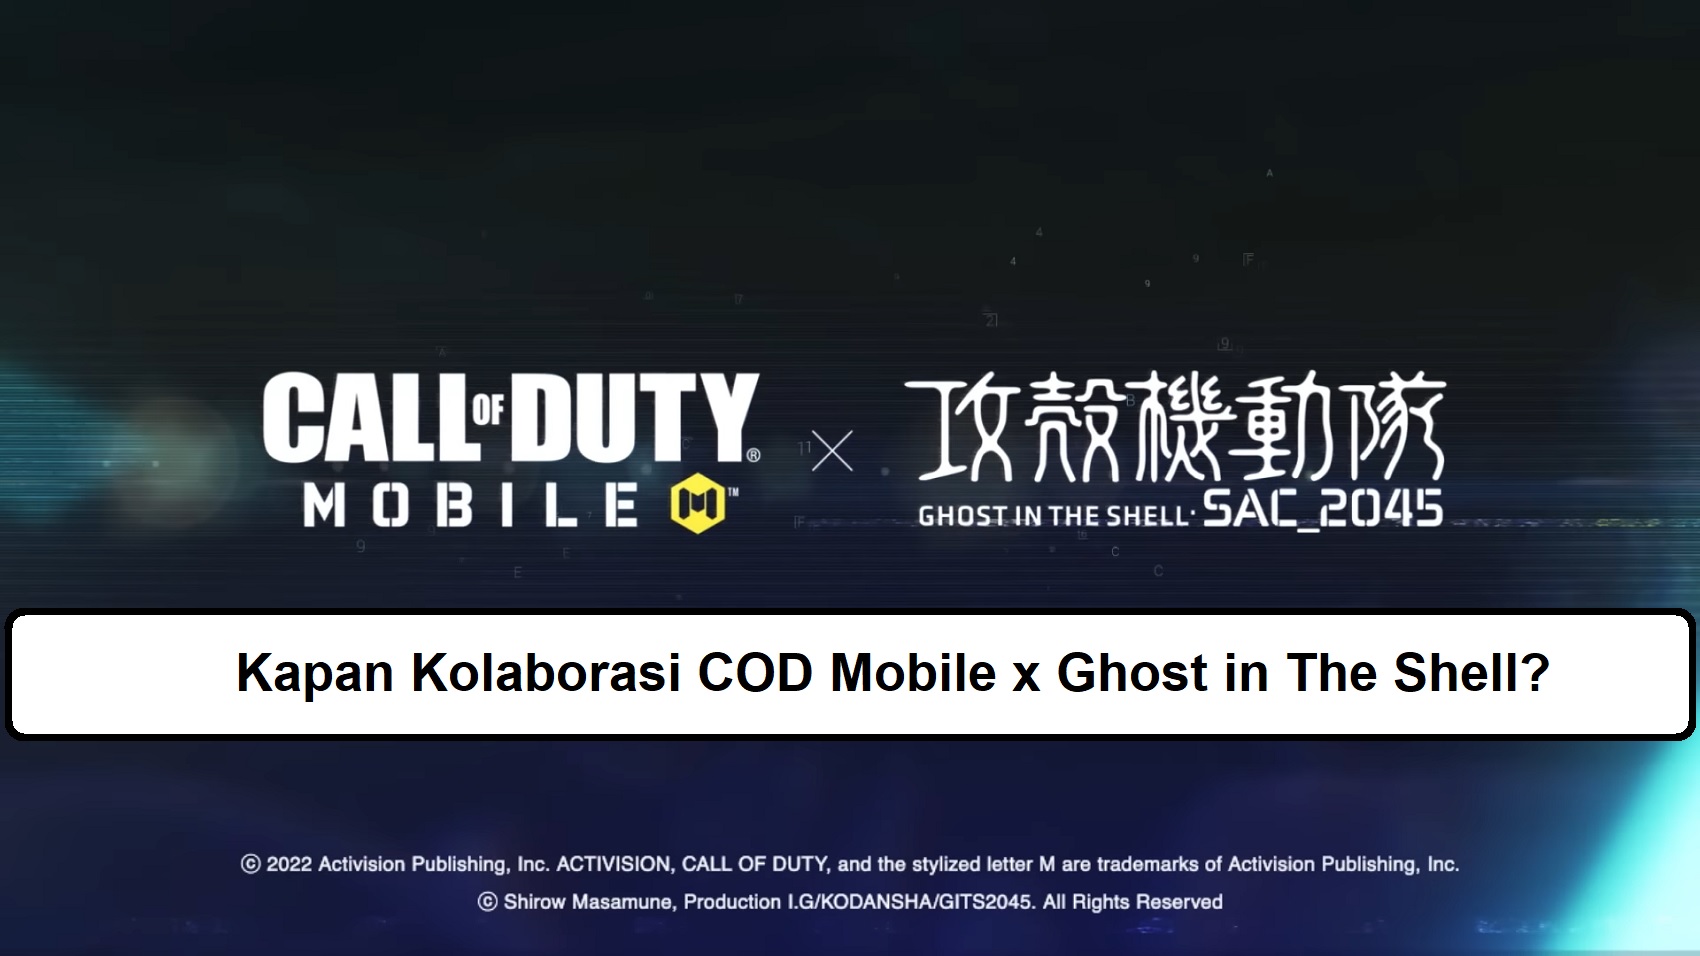 Kapan Kolaborasi COD Mobile x Ghost in The Shell?